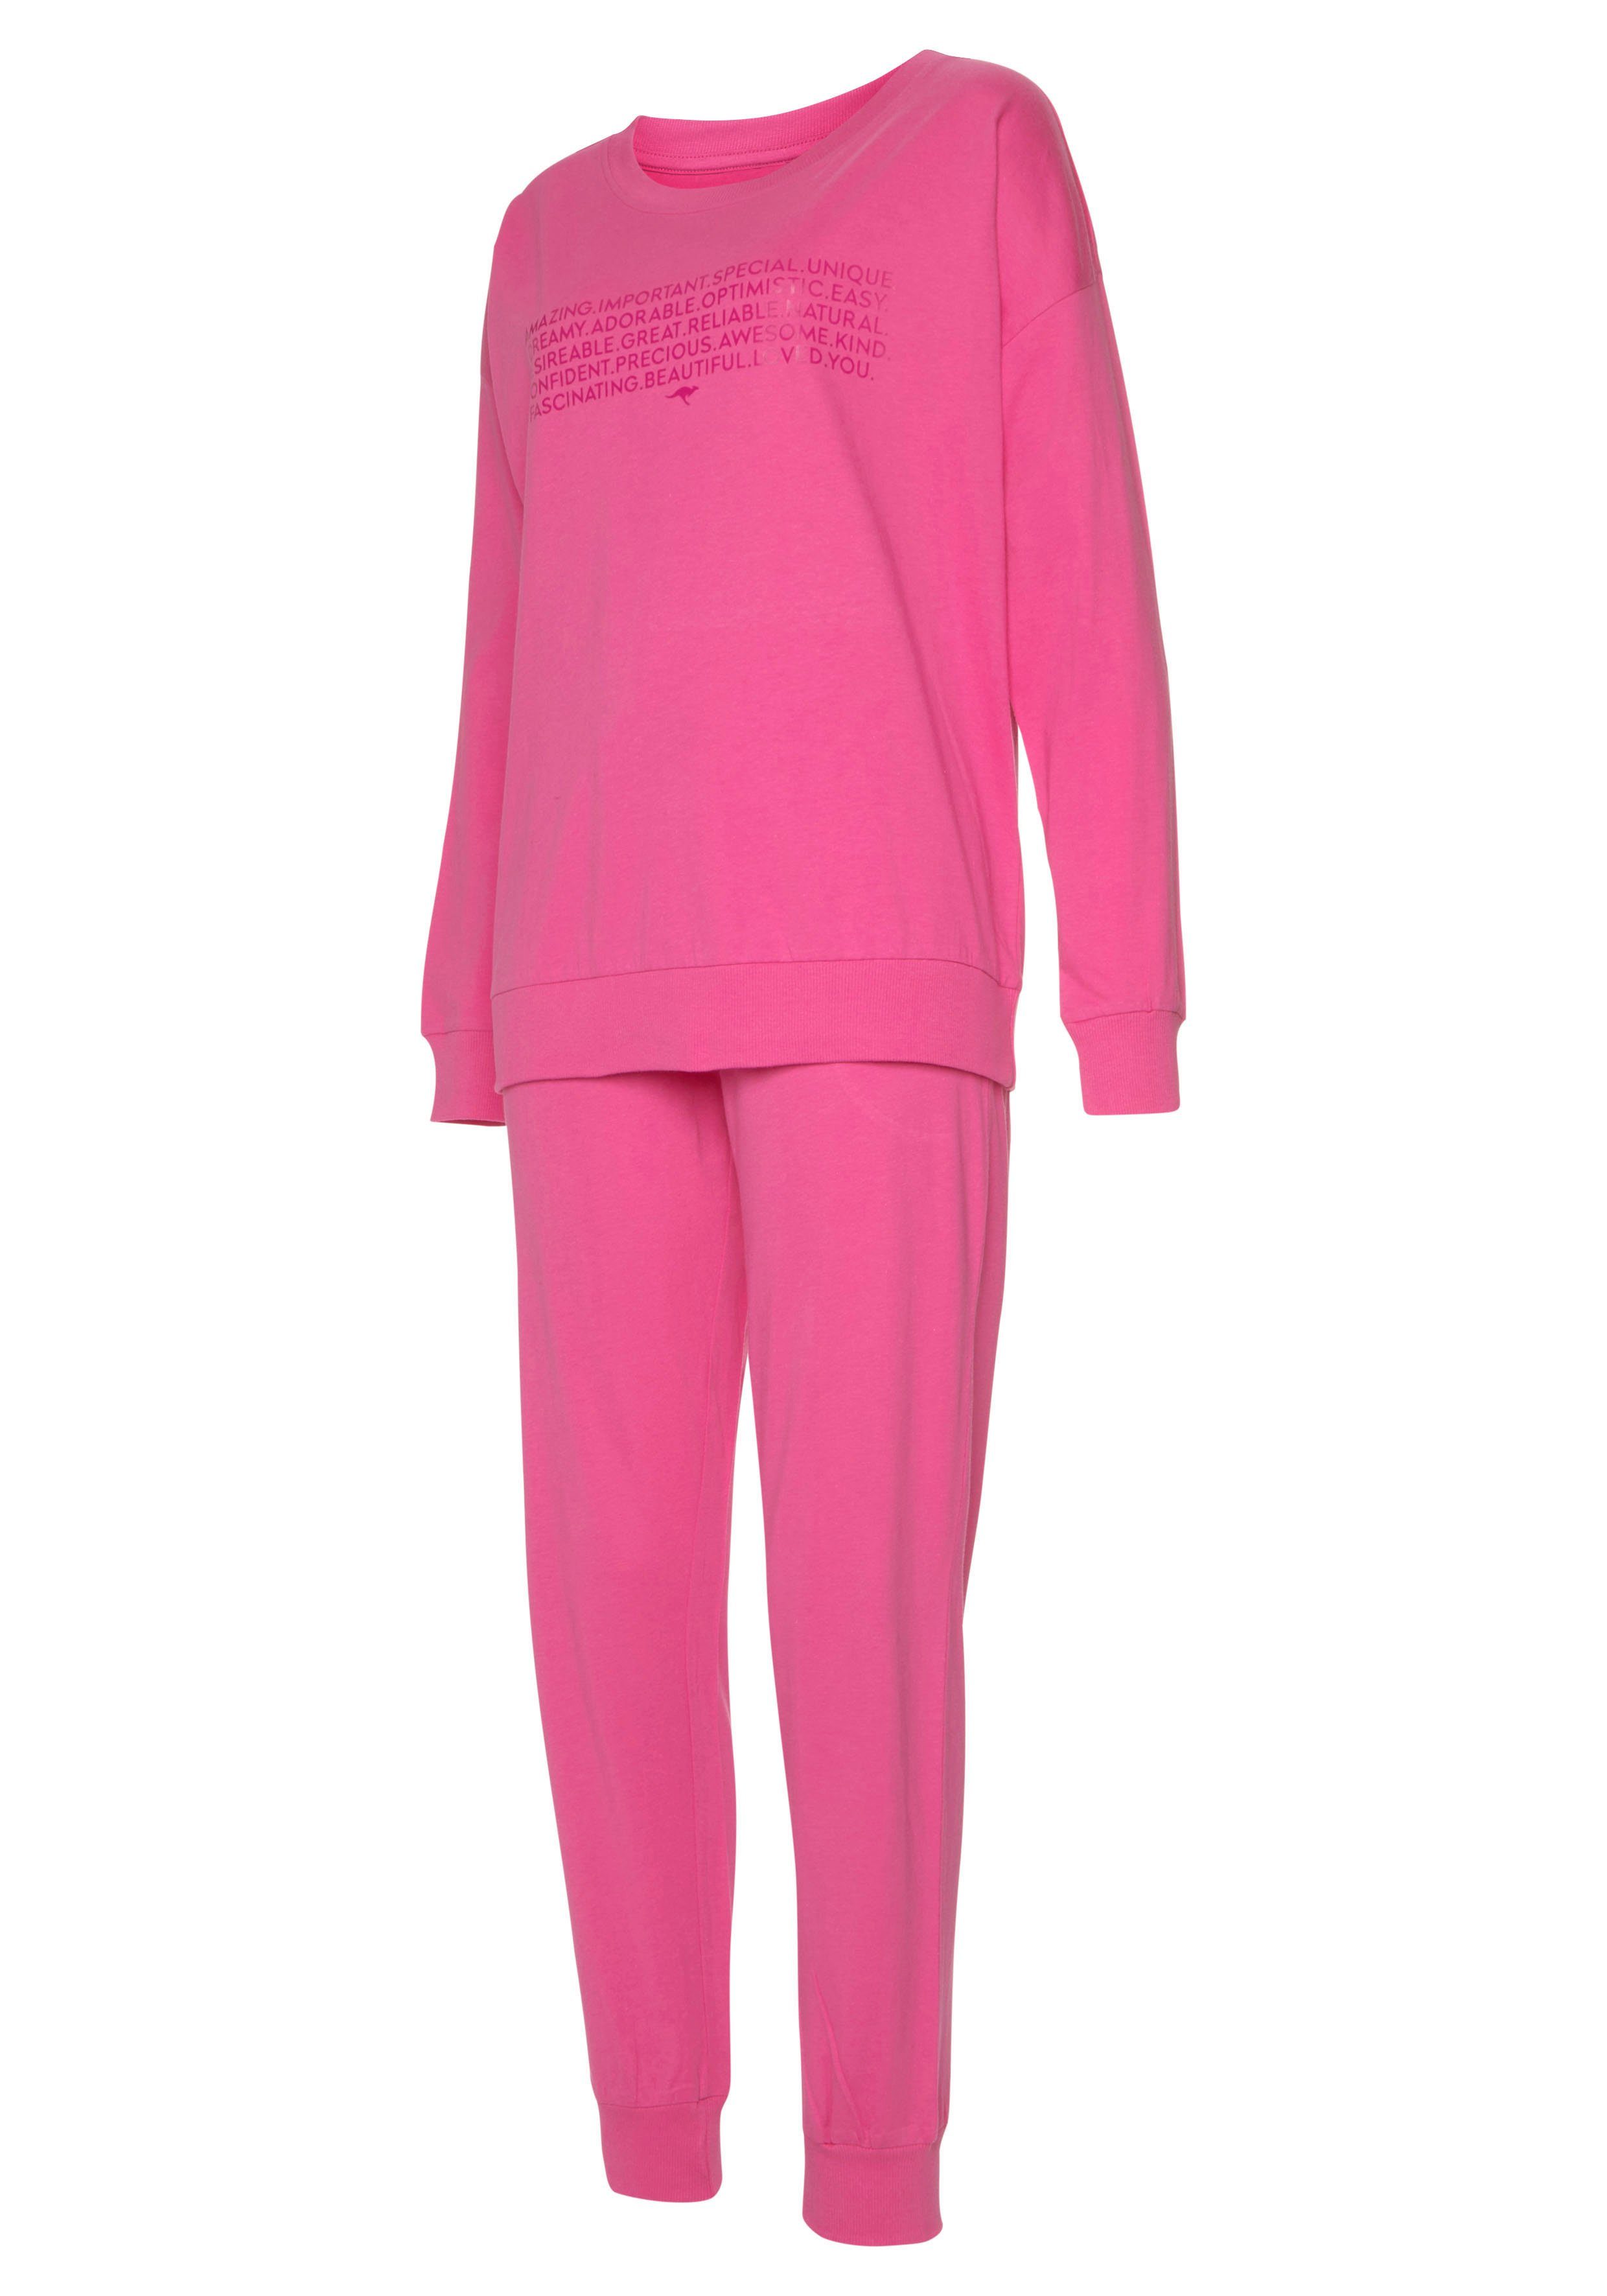 tlg., 1 Pyjama Slogan-Frontdruck Stück) (2 pink mit KangaROOS